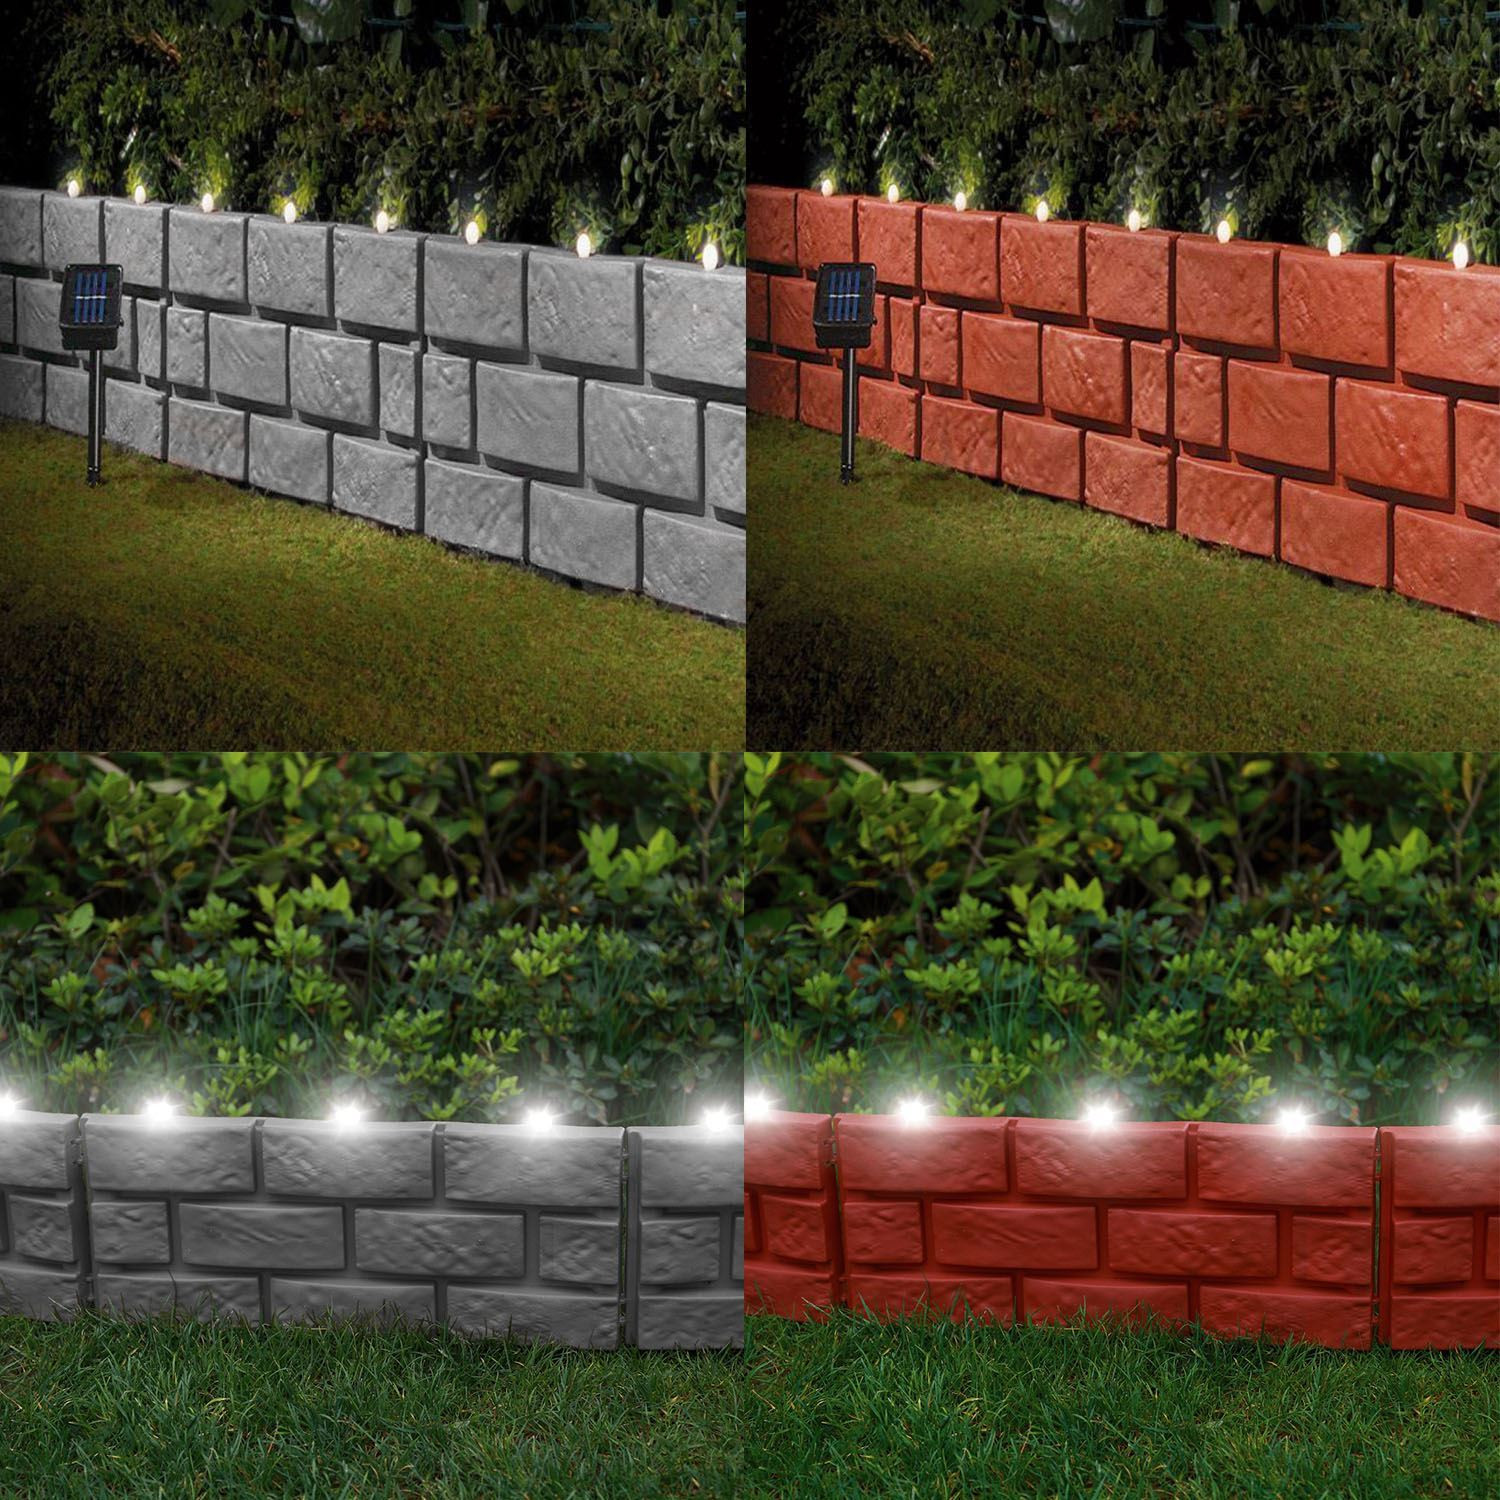 Brick Landscape Edging
 Instant Brick Effect Border Lawn Edging with LED Lights